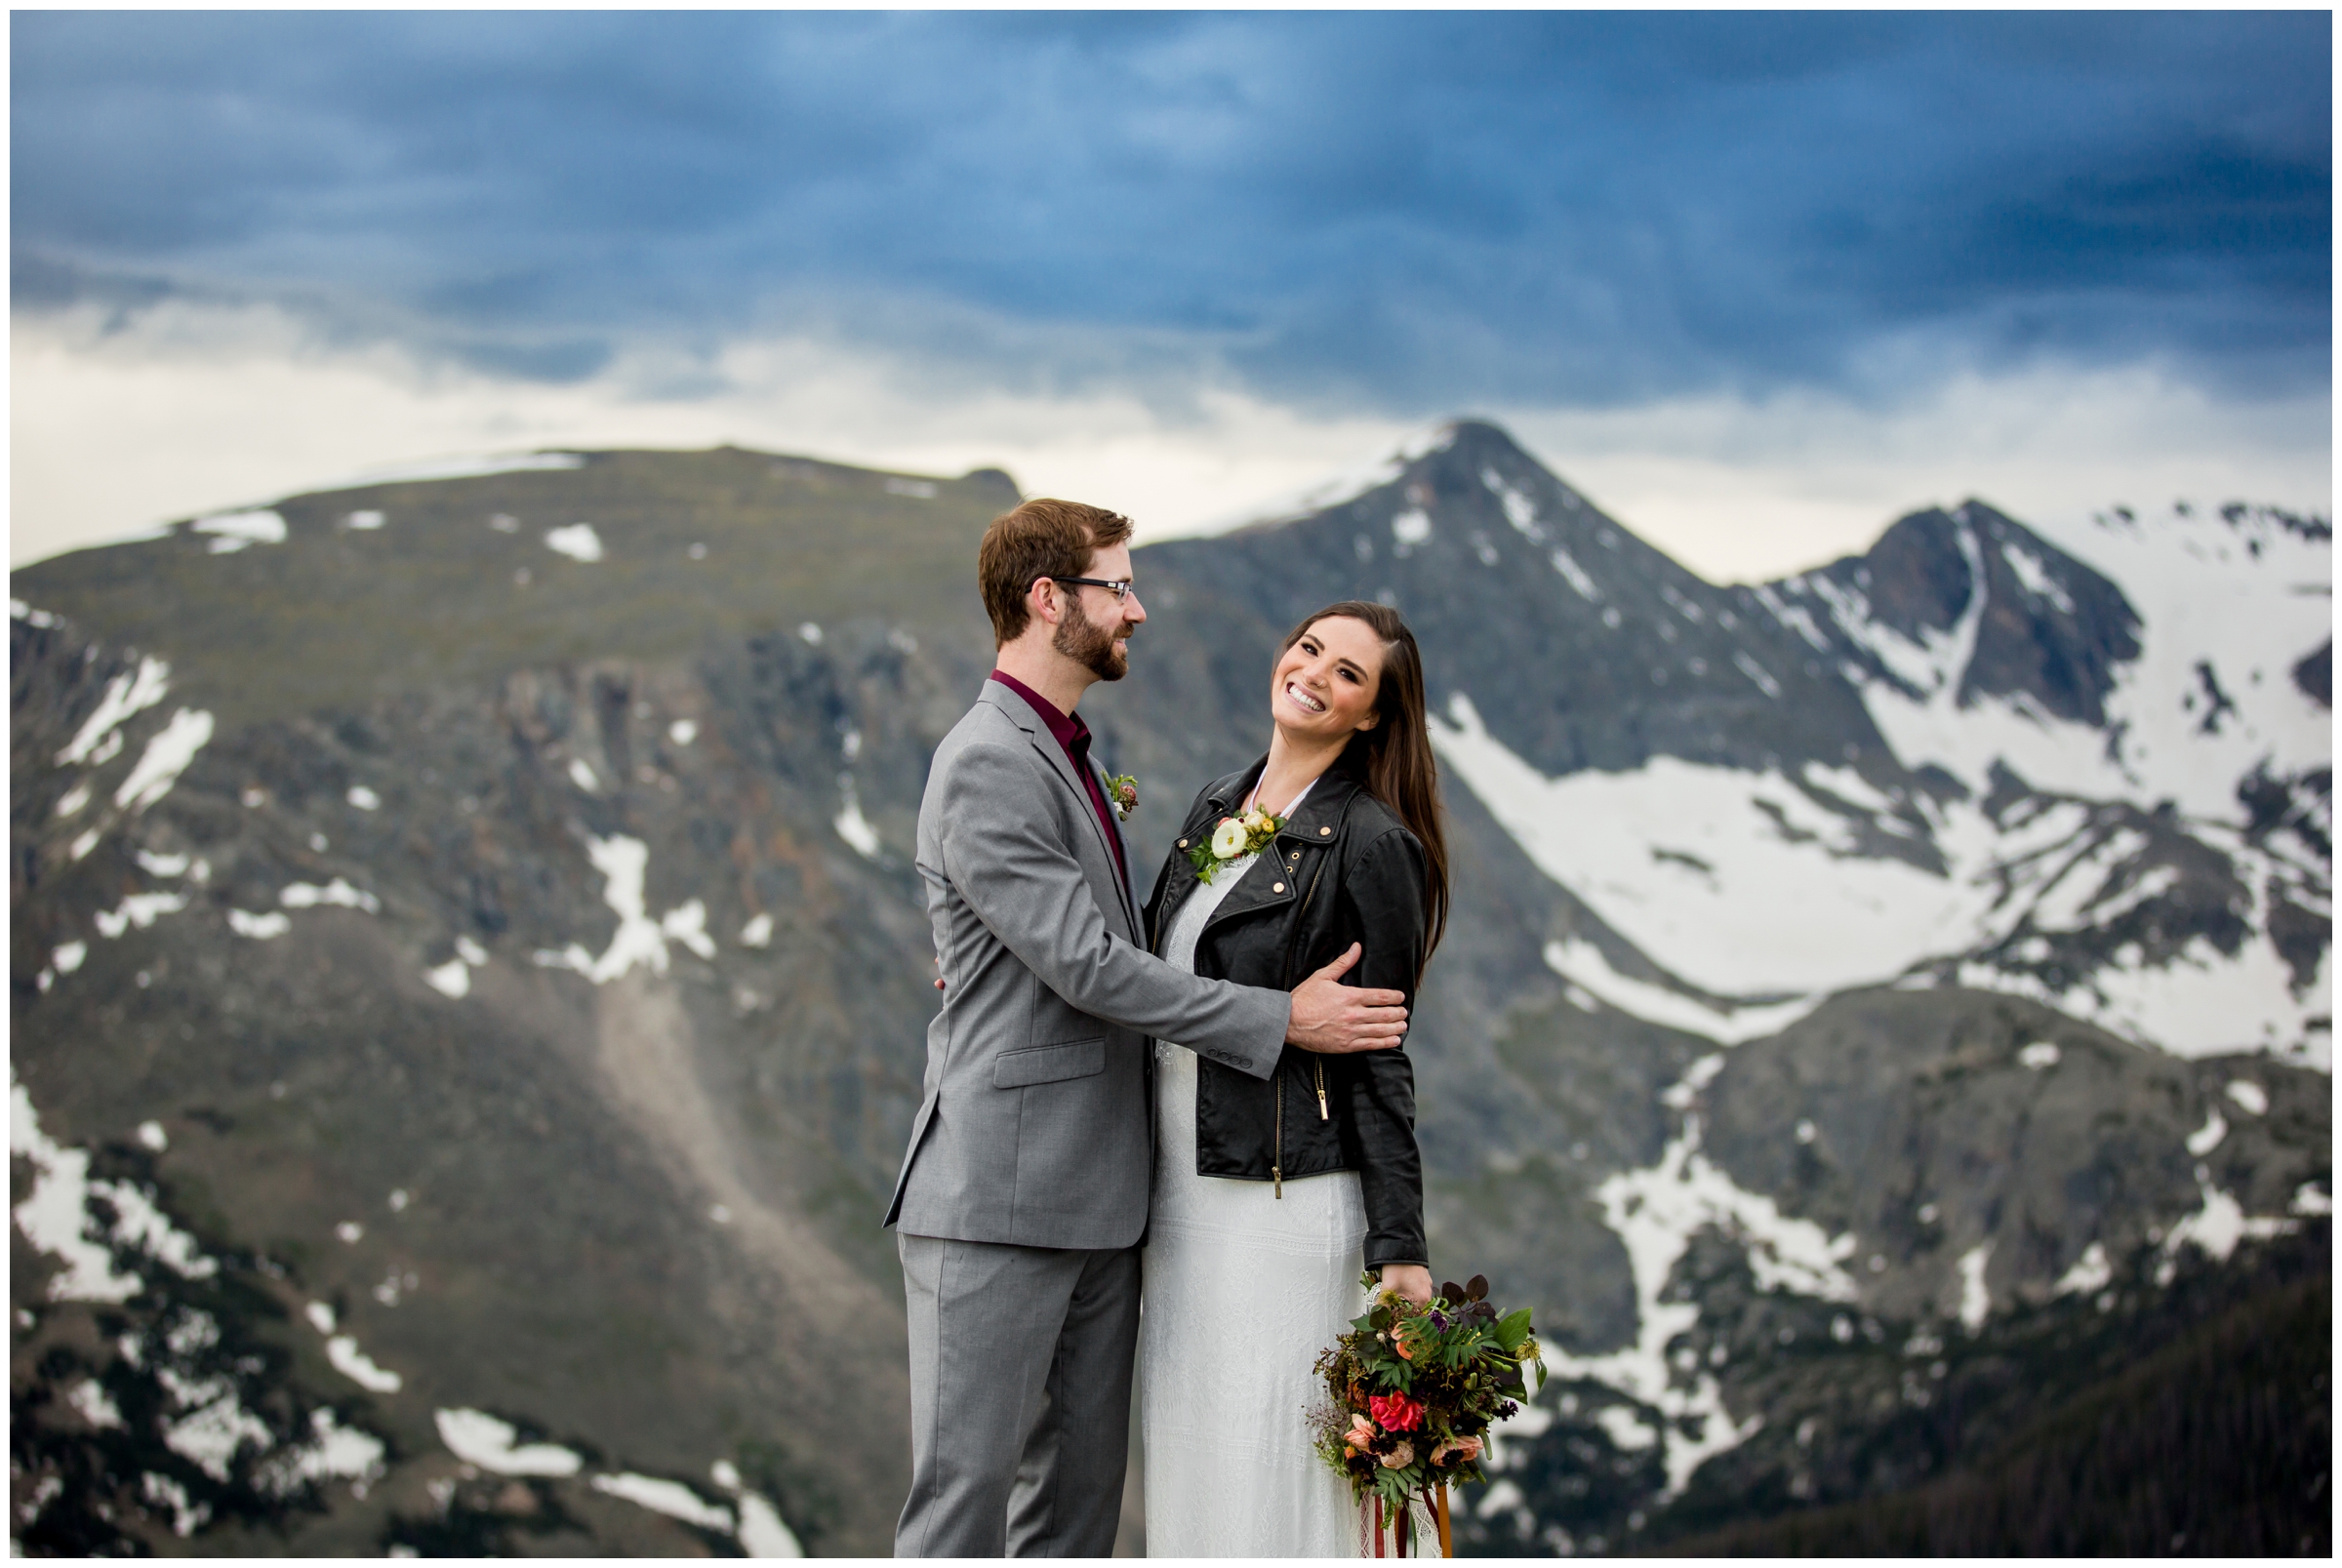 Rocky Mountain National Park Estes Park elopement photos by Colorado wedding photographer Plum Pretty Photography